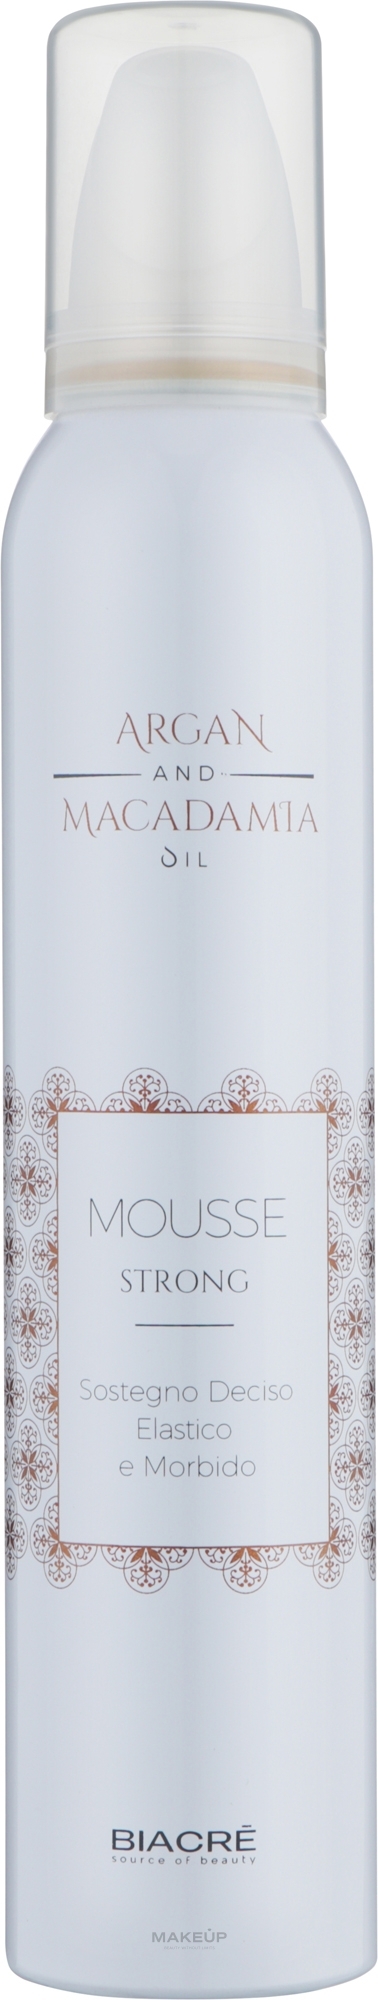 Пінка-мус для укладання "Арганія та макадамія" - Biacre Argan and Macadamia Mousse Volume — фото 200ml